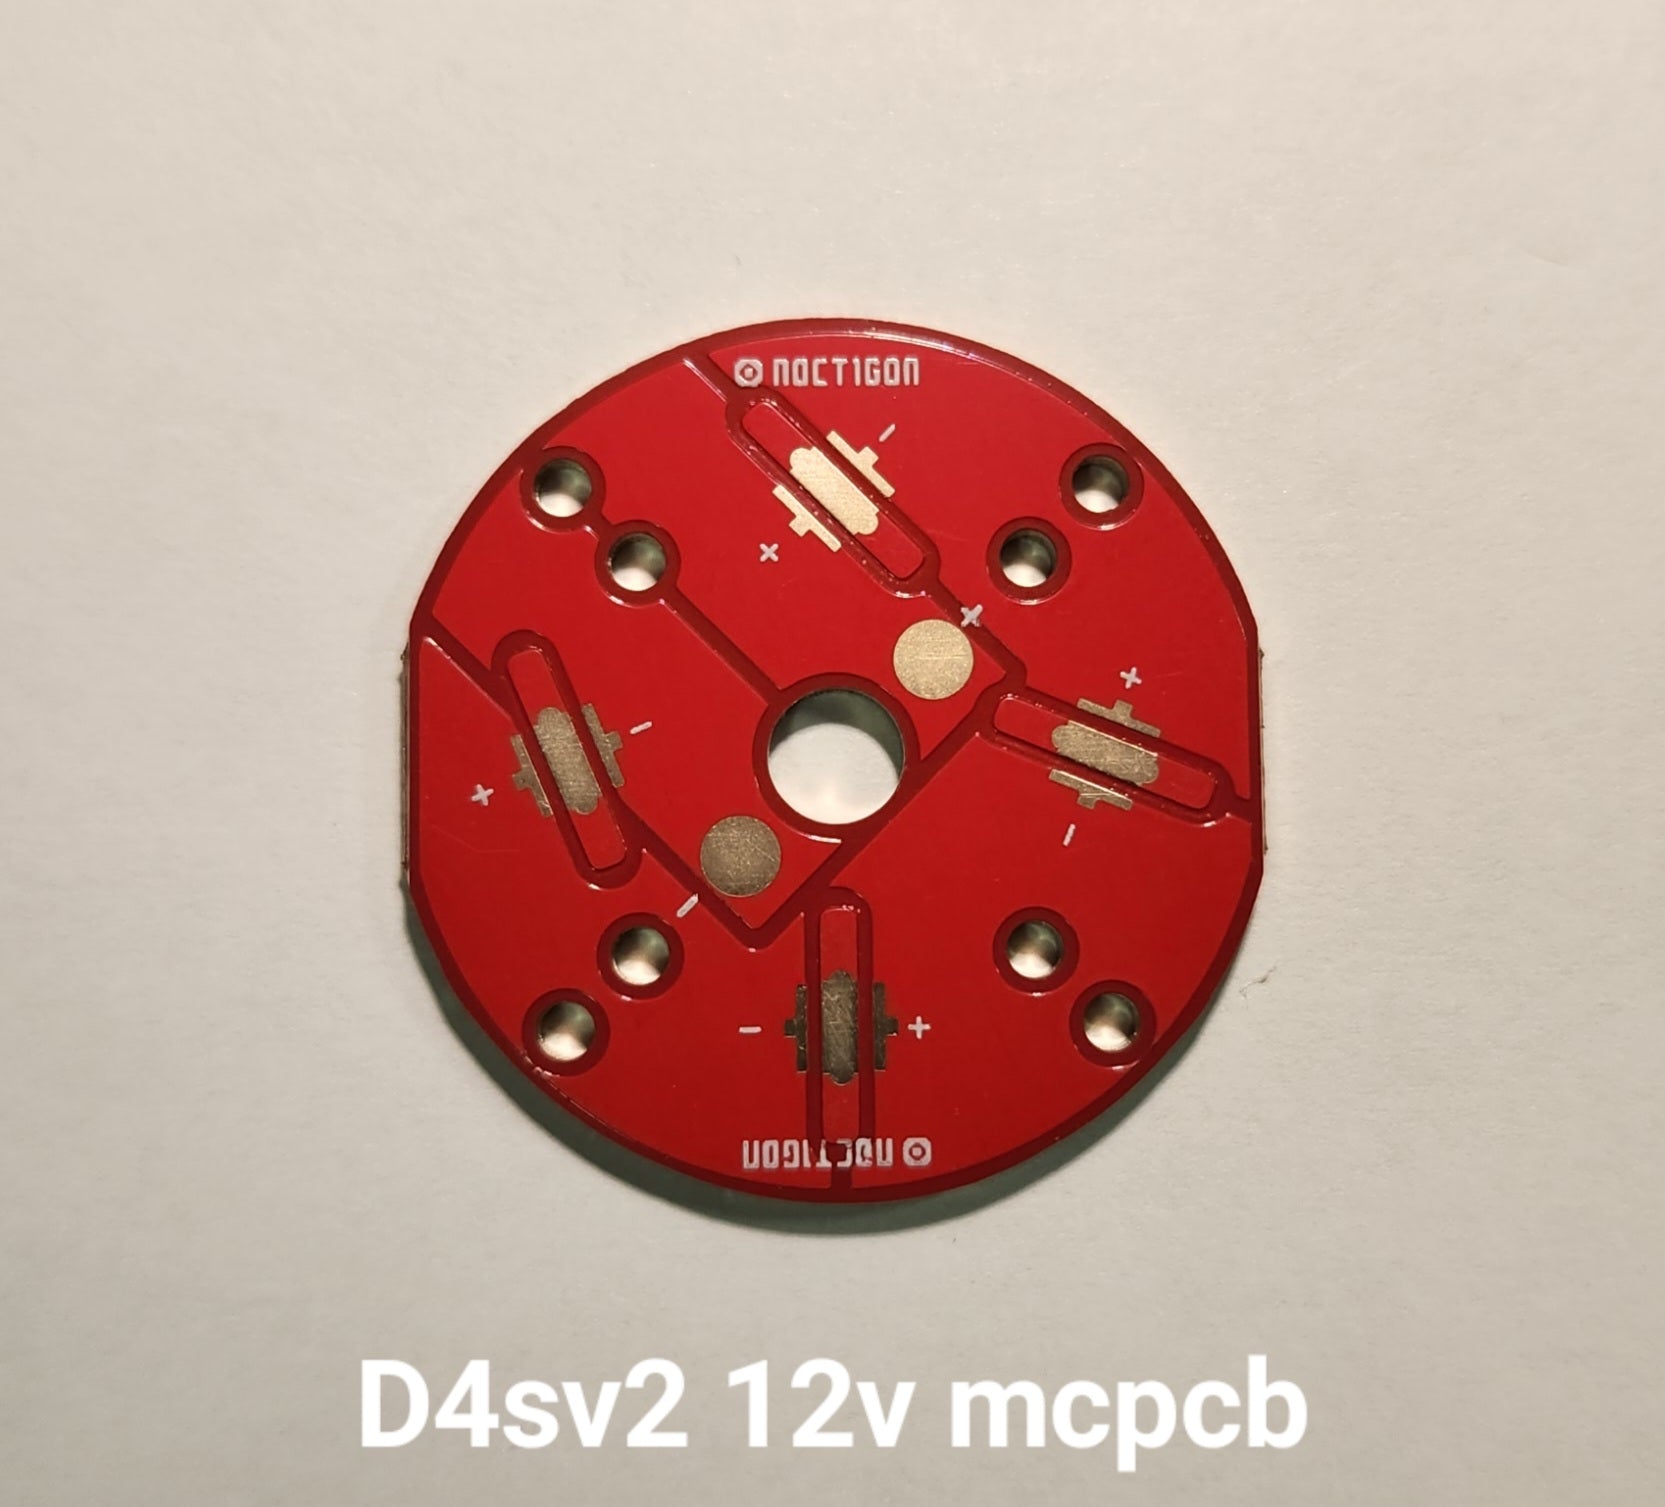 Emisar Noctigon XP Raw MCPCB D4SV2 12V QUAD MCPCB (BOOST DRIVER)